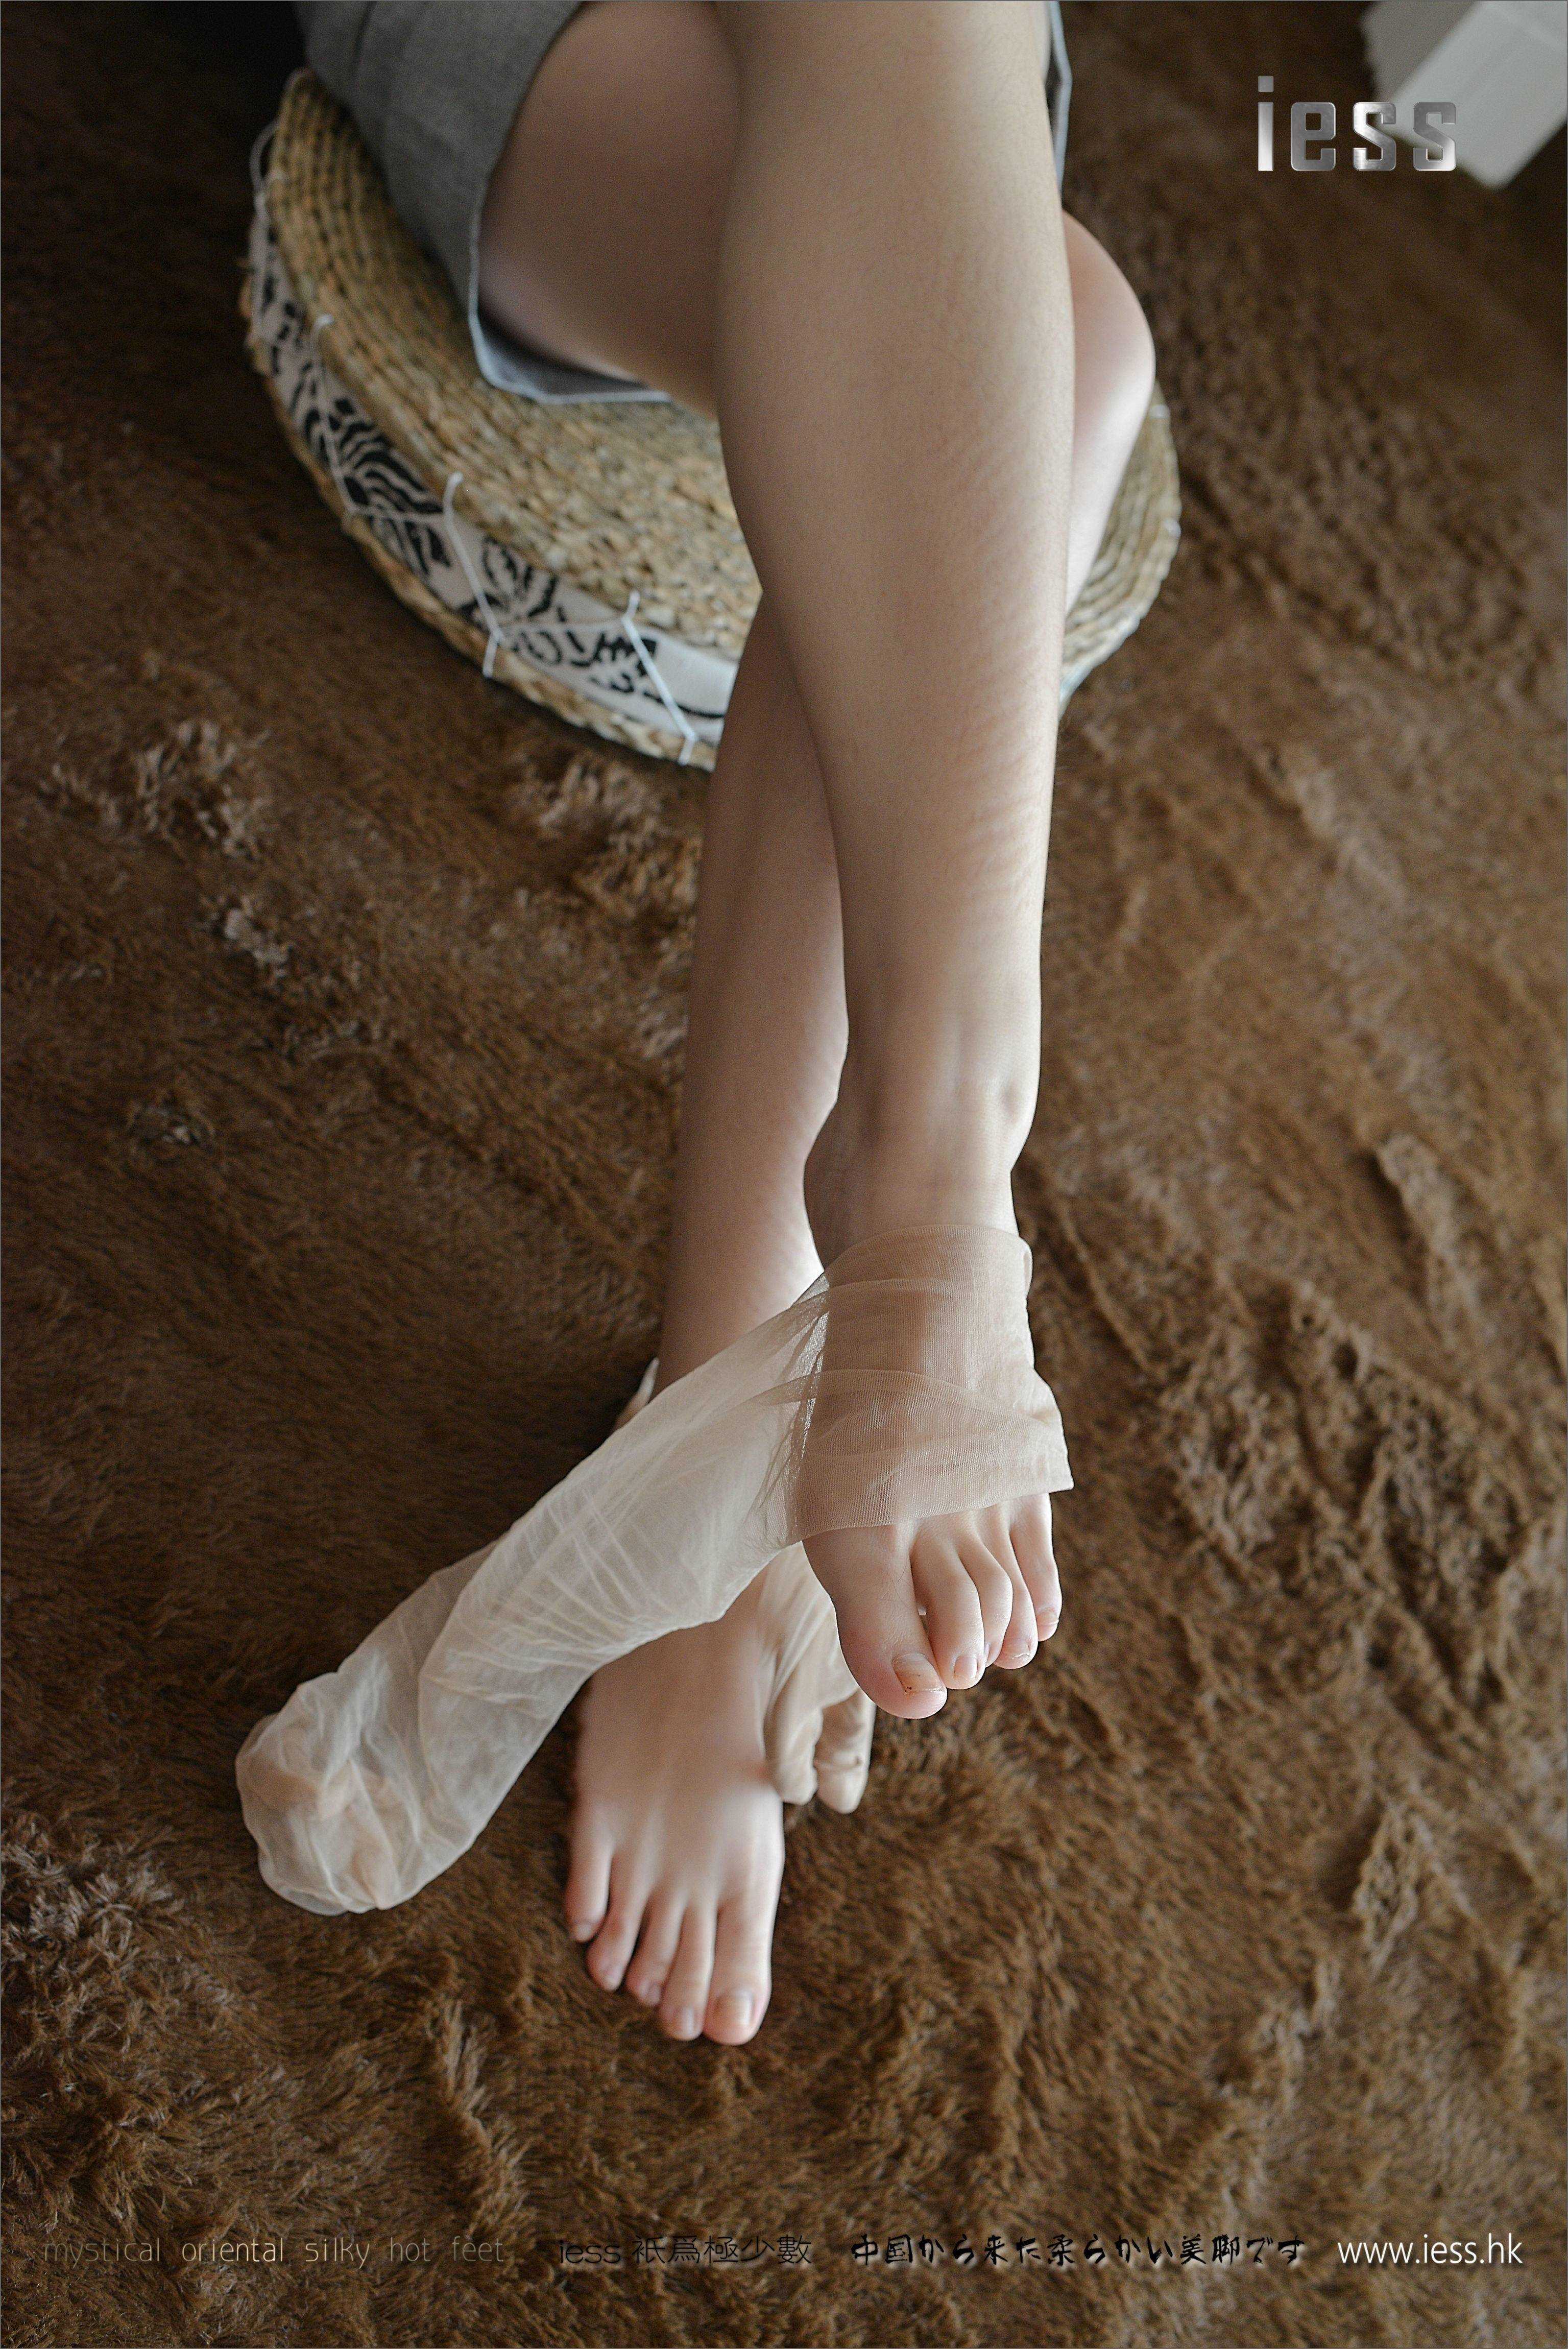 China Beauty Legs and feet 209